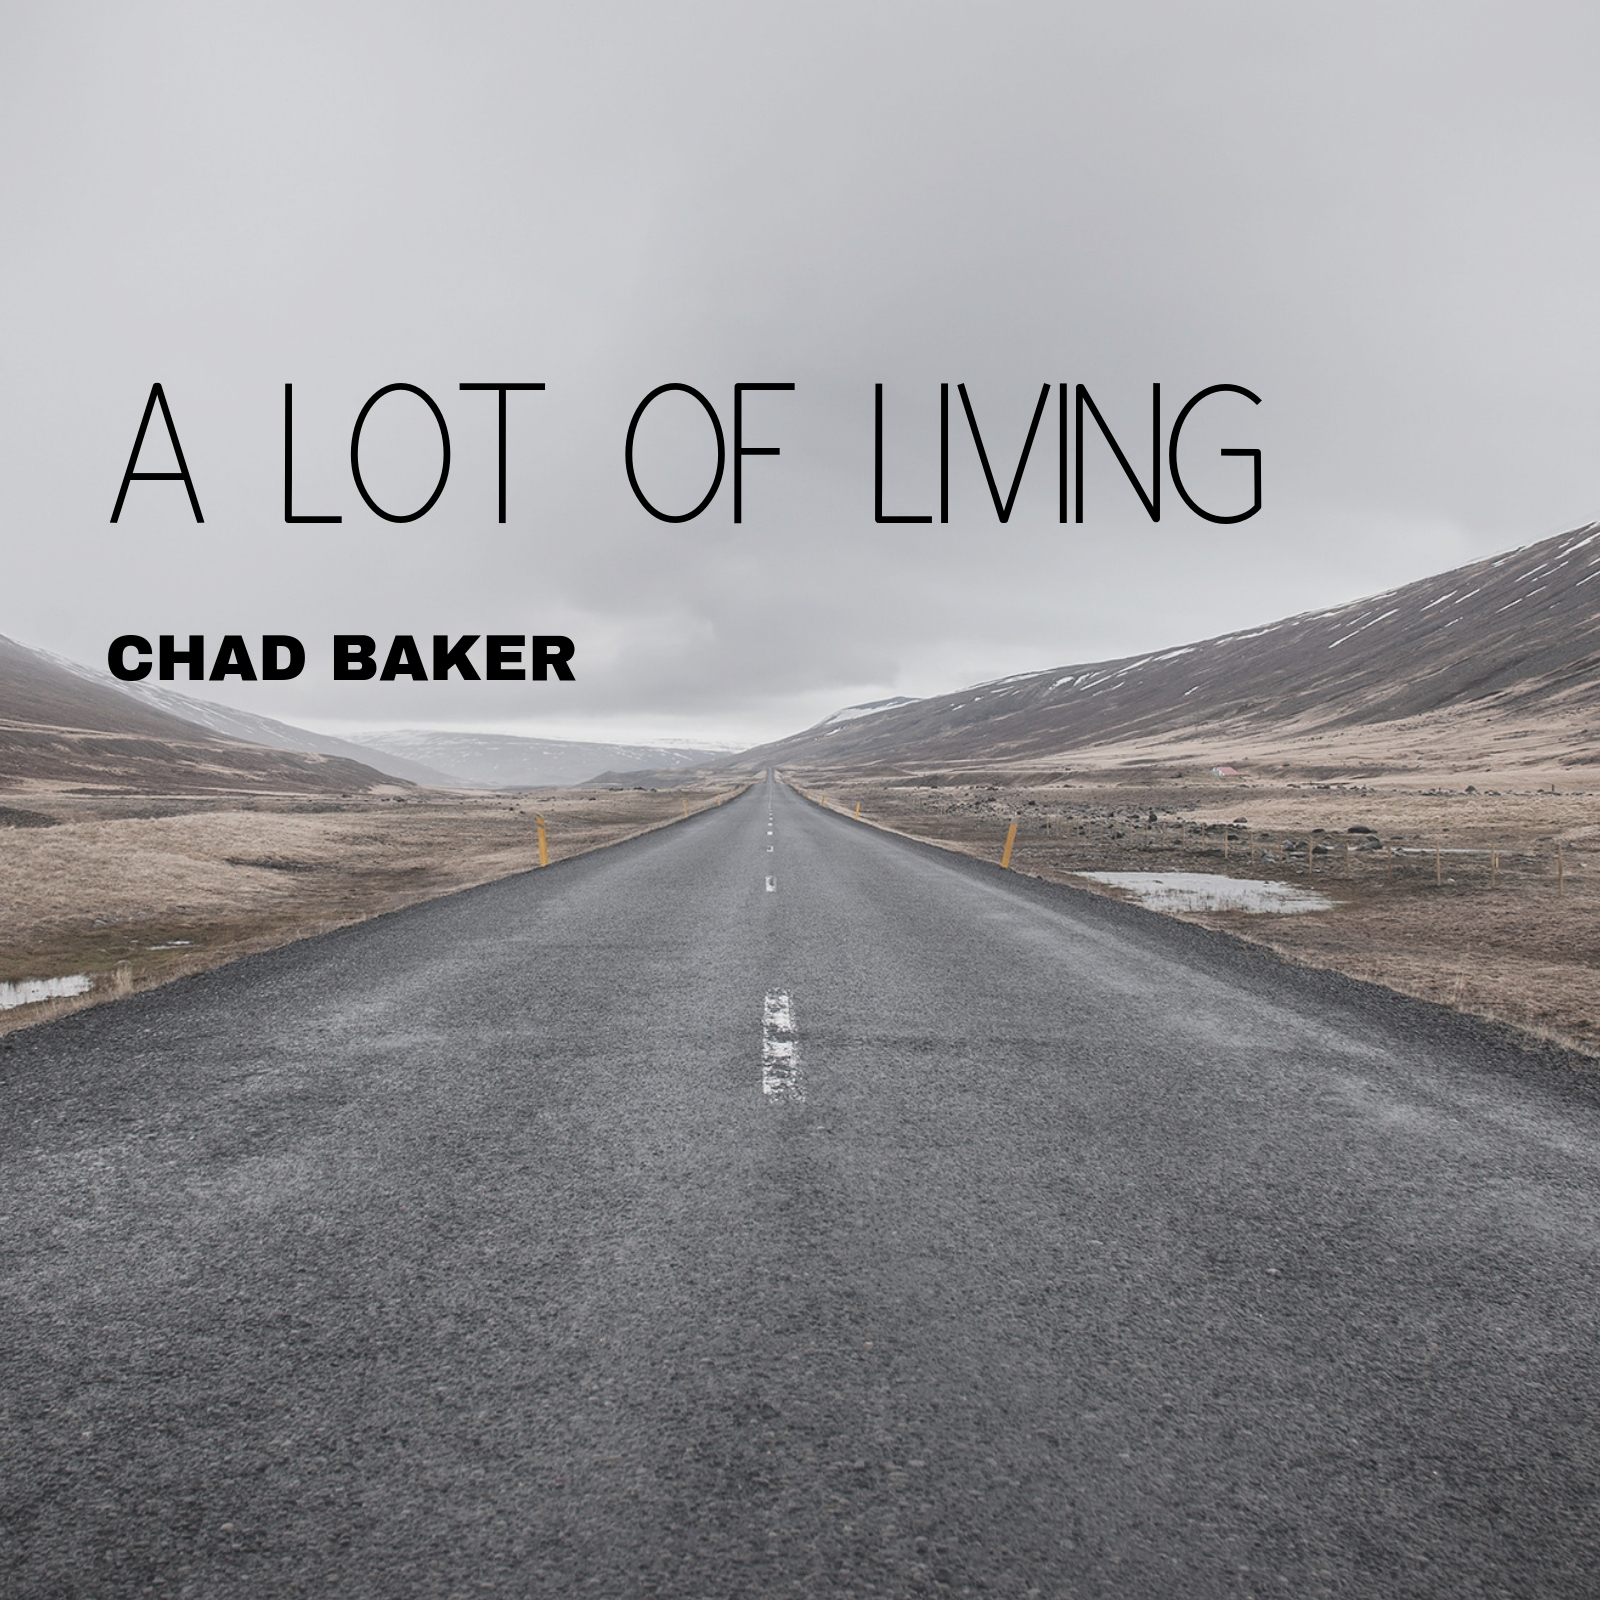 Chad Baker